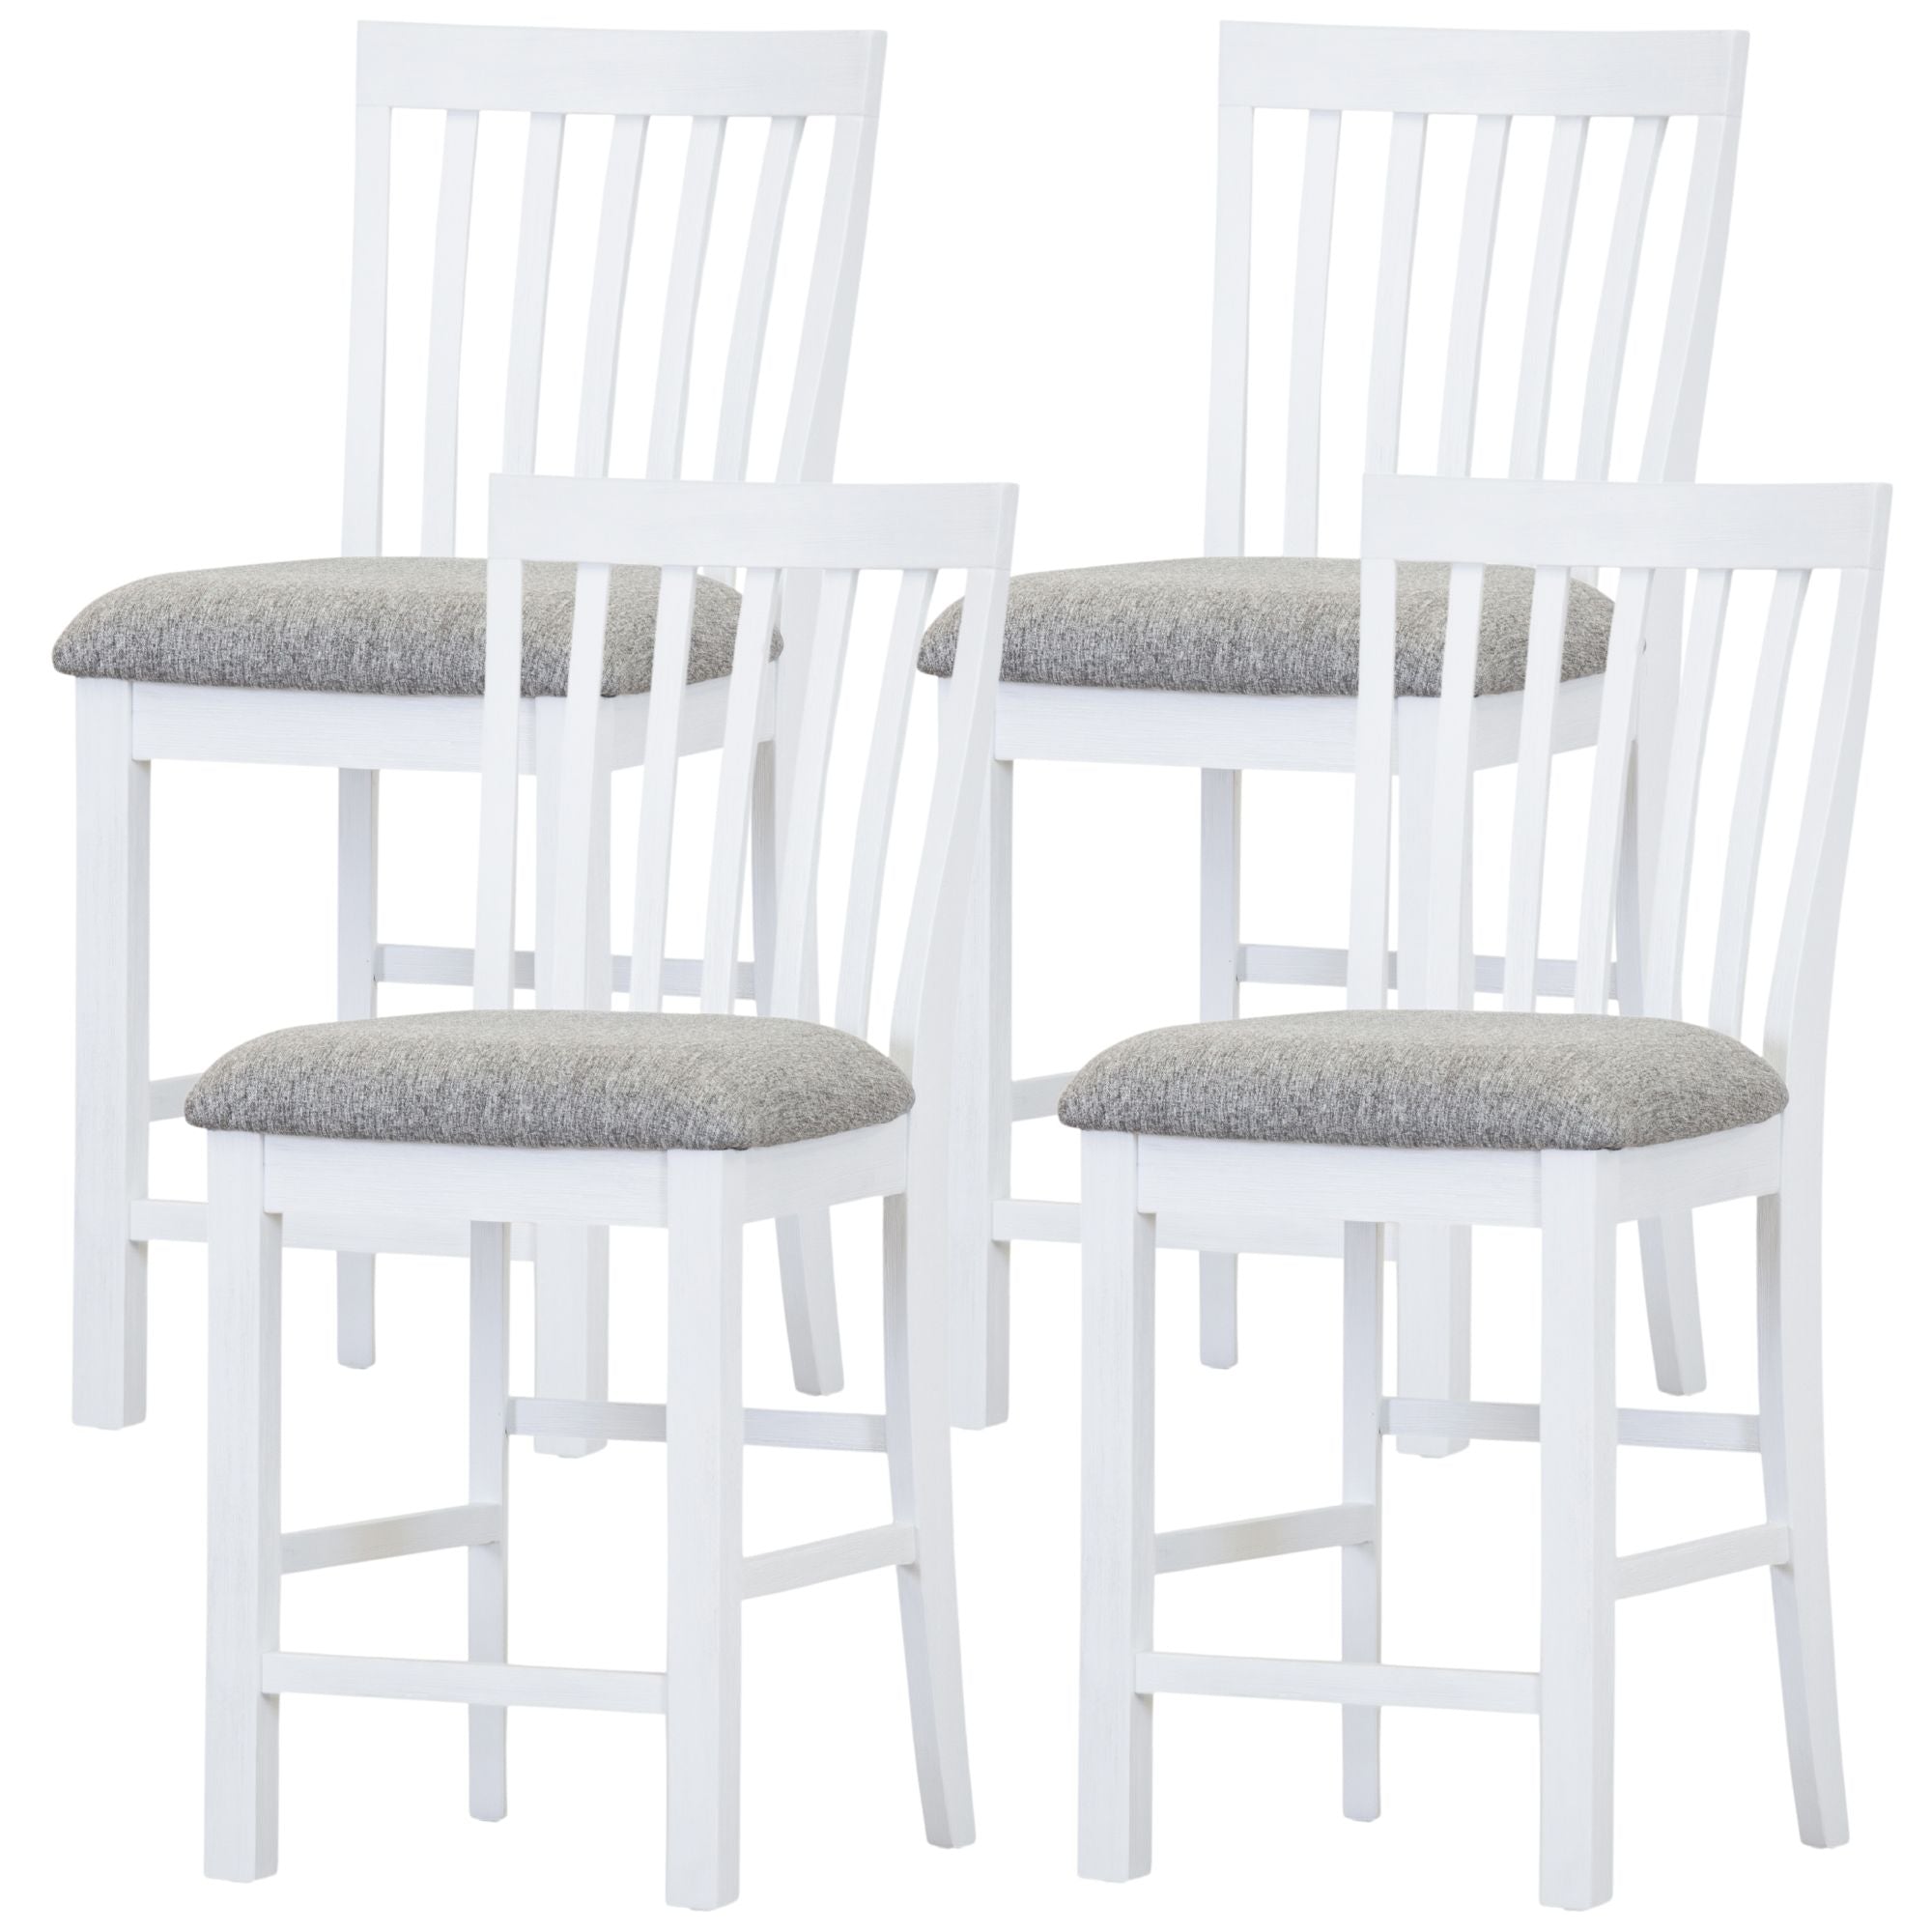 Laelia Tall Bar Chair Stool Set of 4 Solid Acacia Wood Coastal Furniture - White